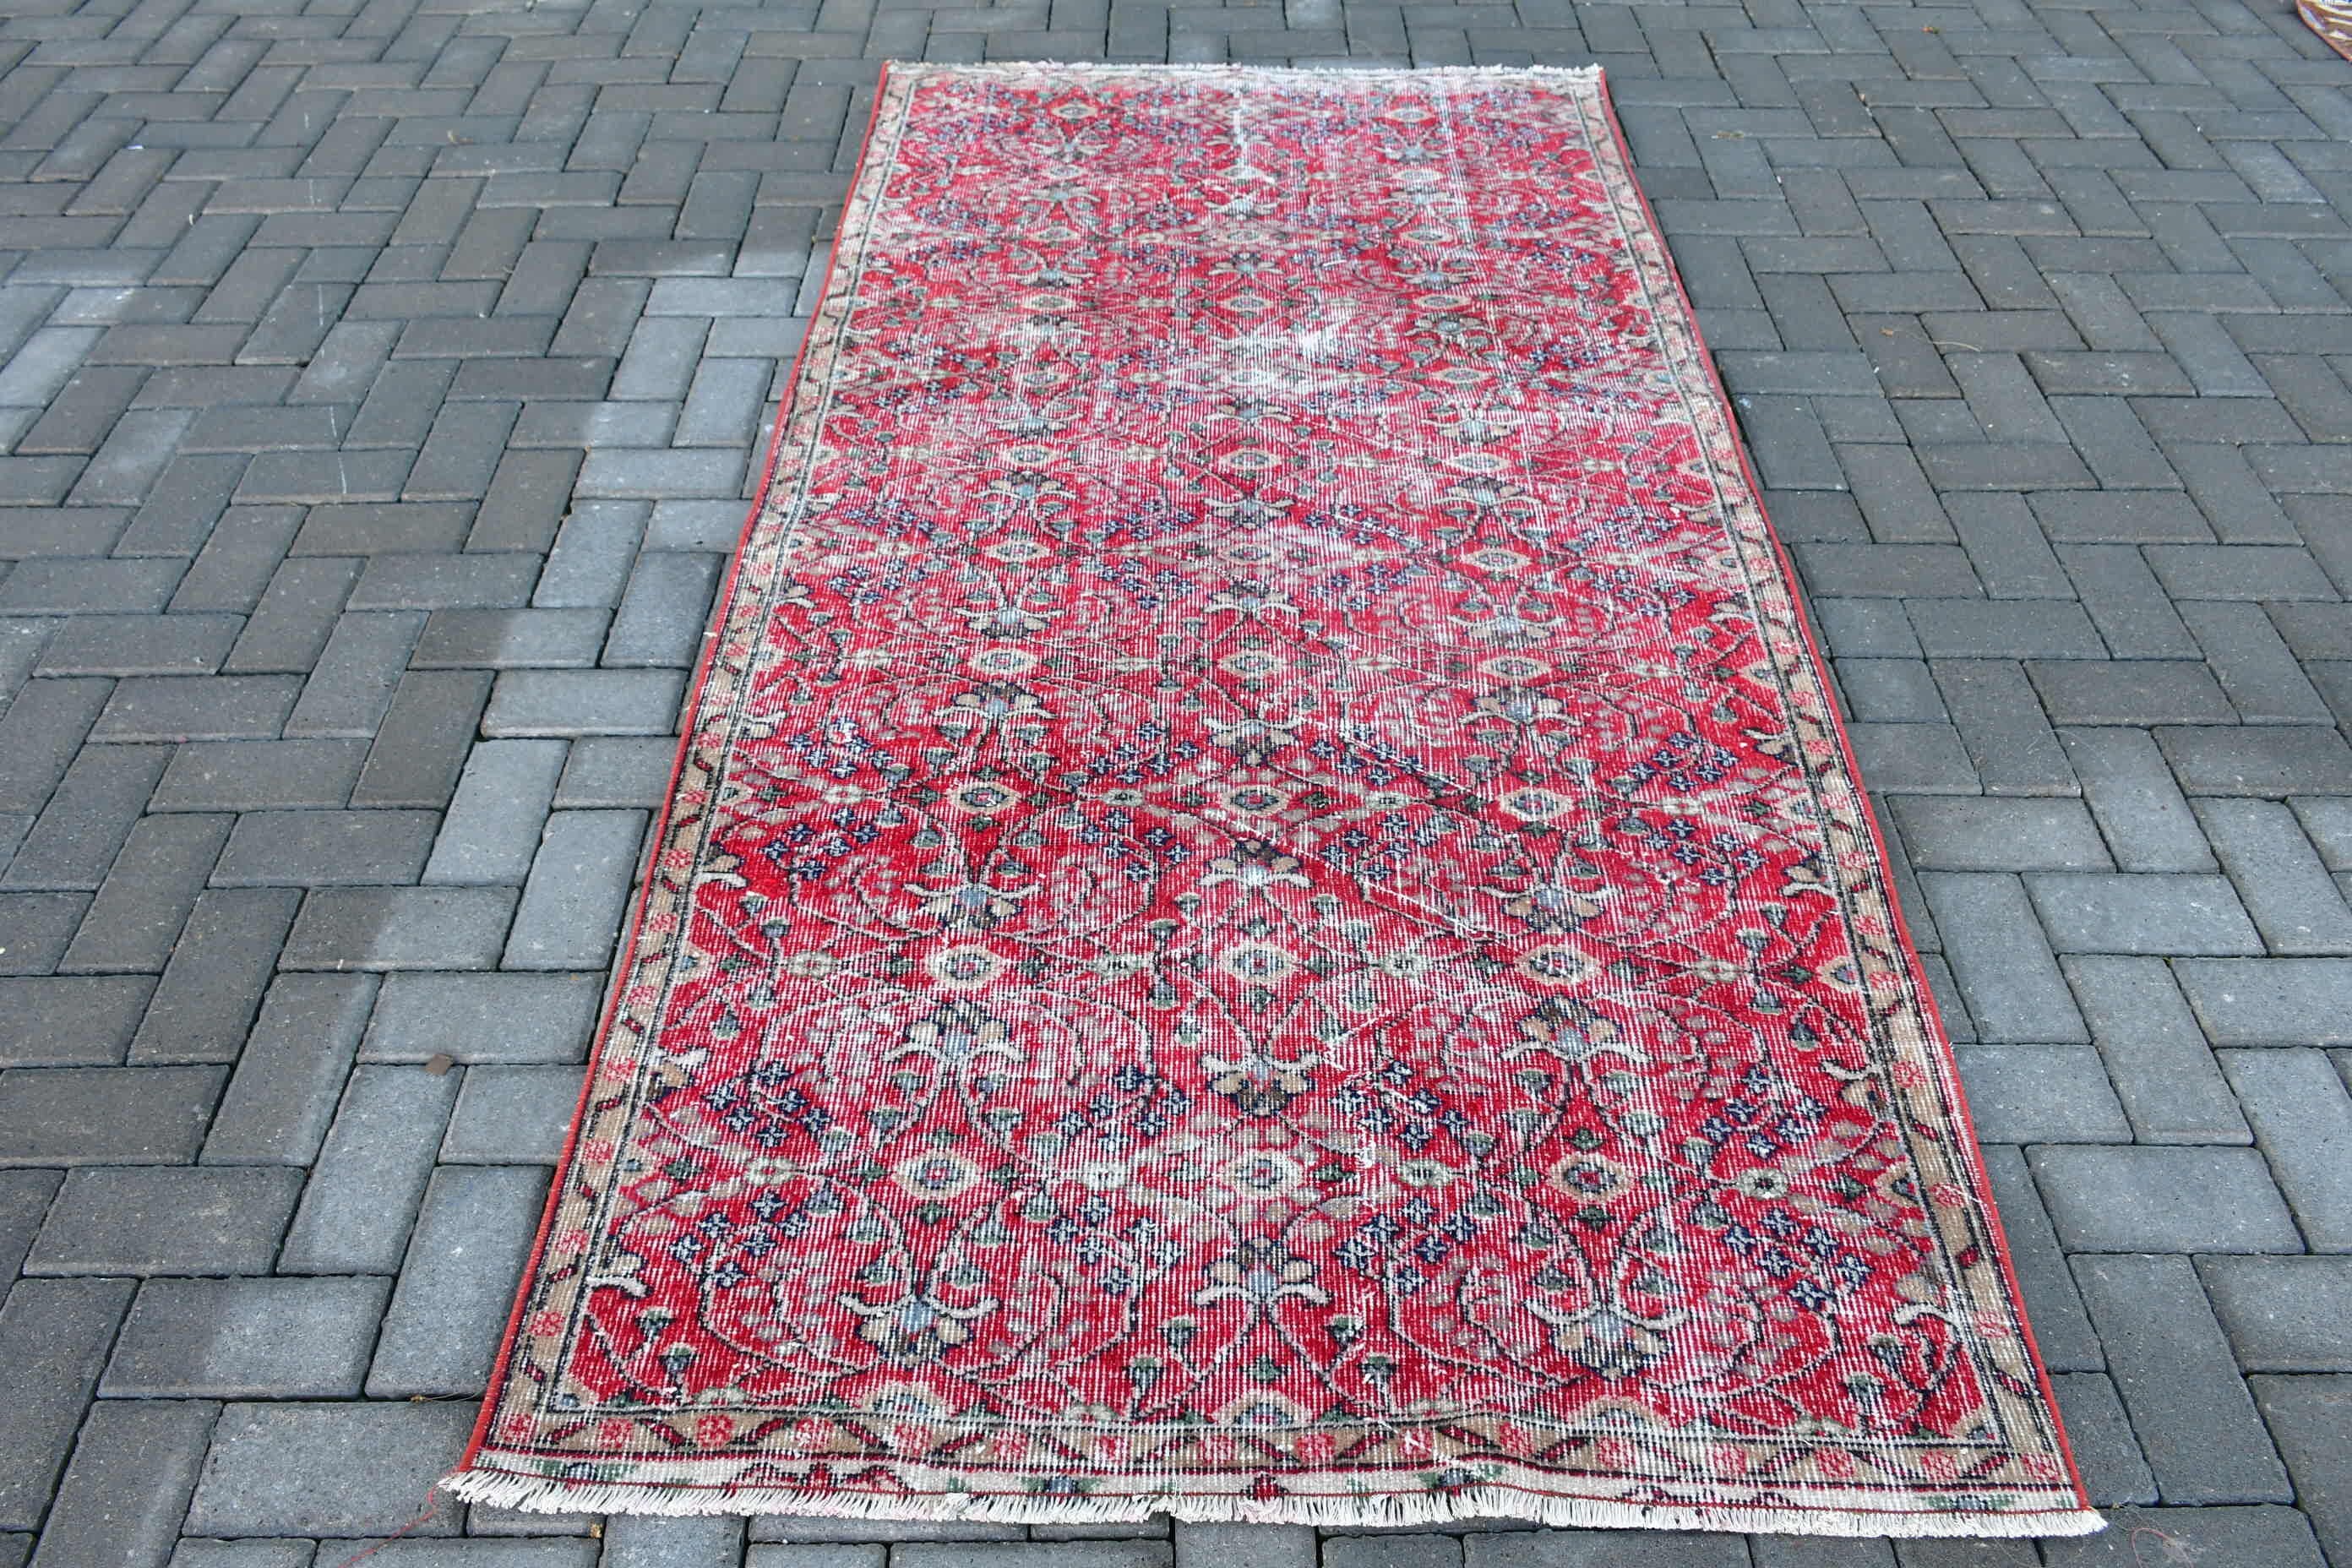 Art Rug, Turkish Rugs, Antique Rug, Red  3.8x7.6 ft Area Rug, Vintage Rugs, Floor Rug, Rugs for Living Room, Kitchen Rug